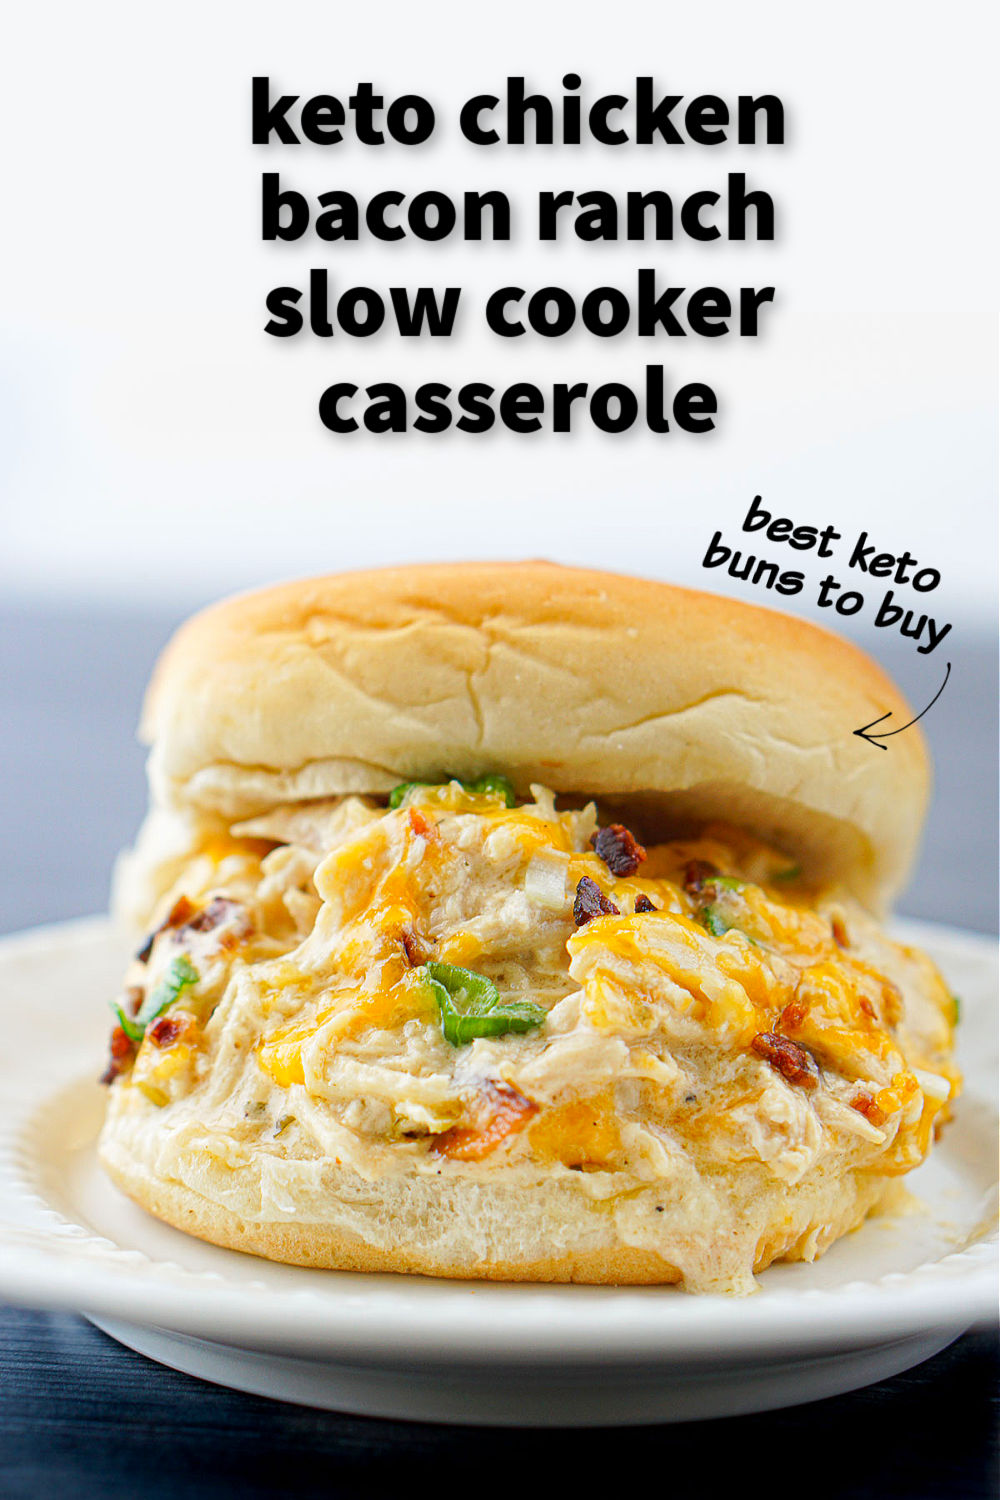 Easy Keto Chicken Bacon Ranch Casserole Recipe in the Slow Cooker